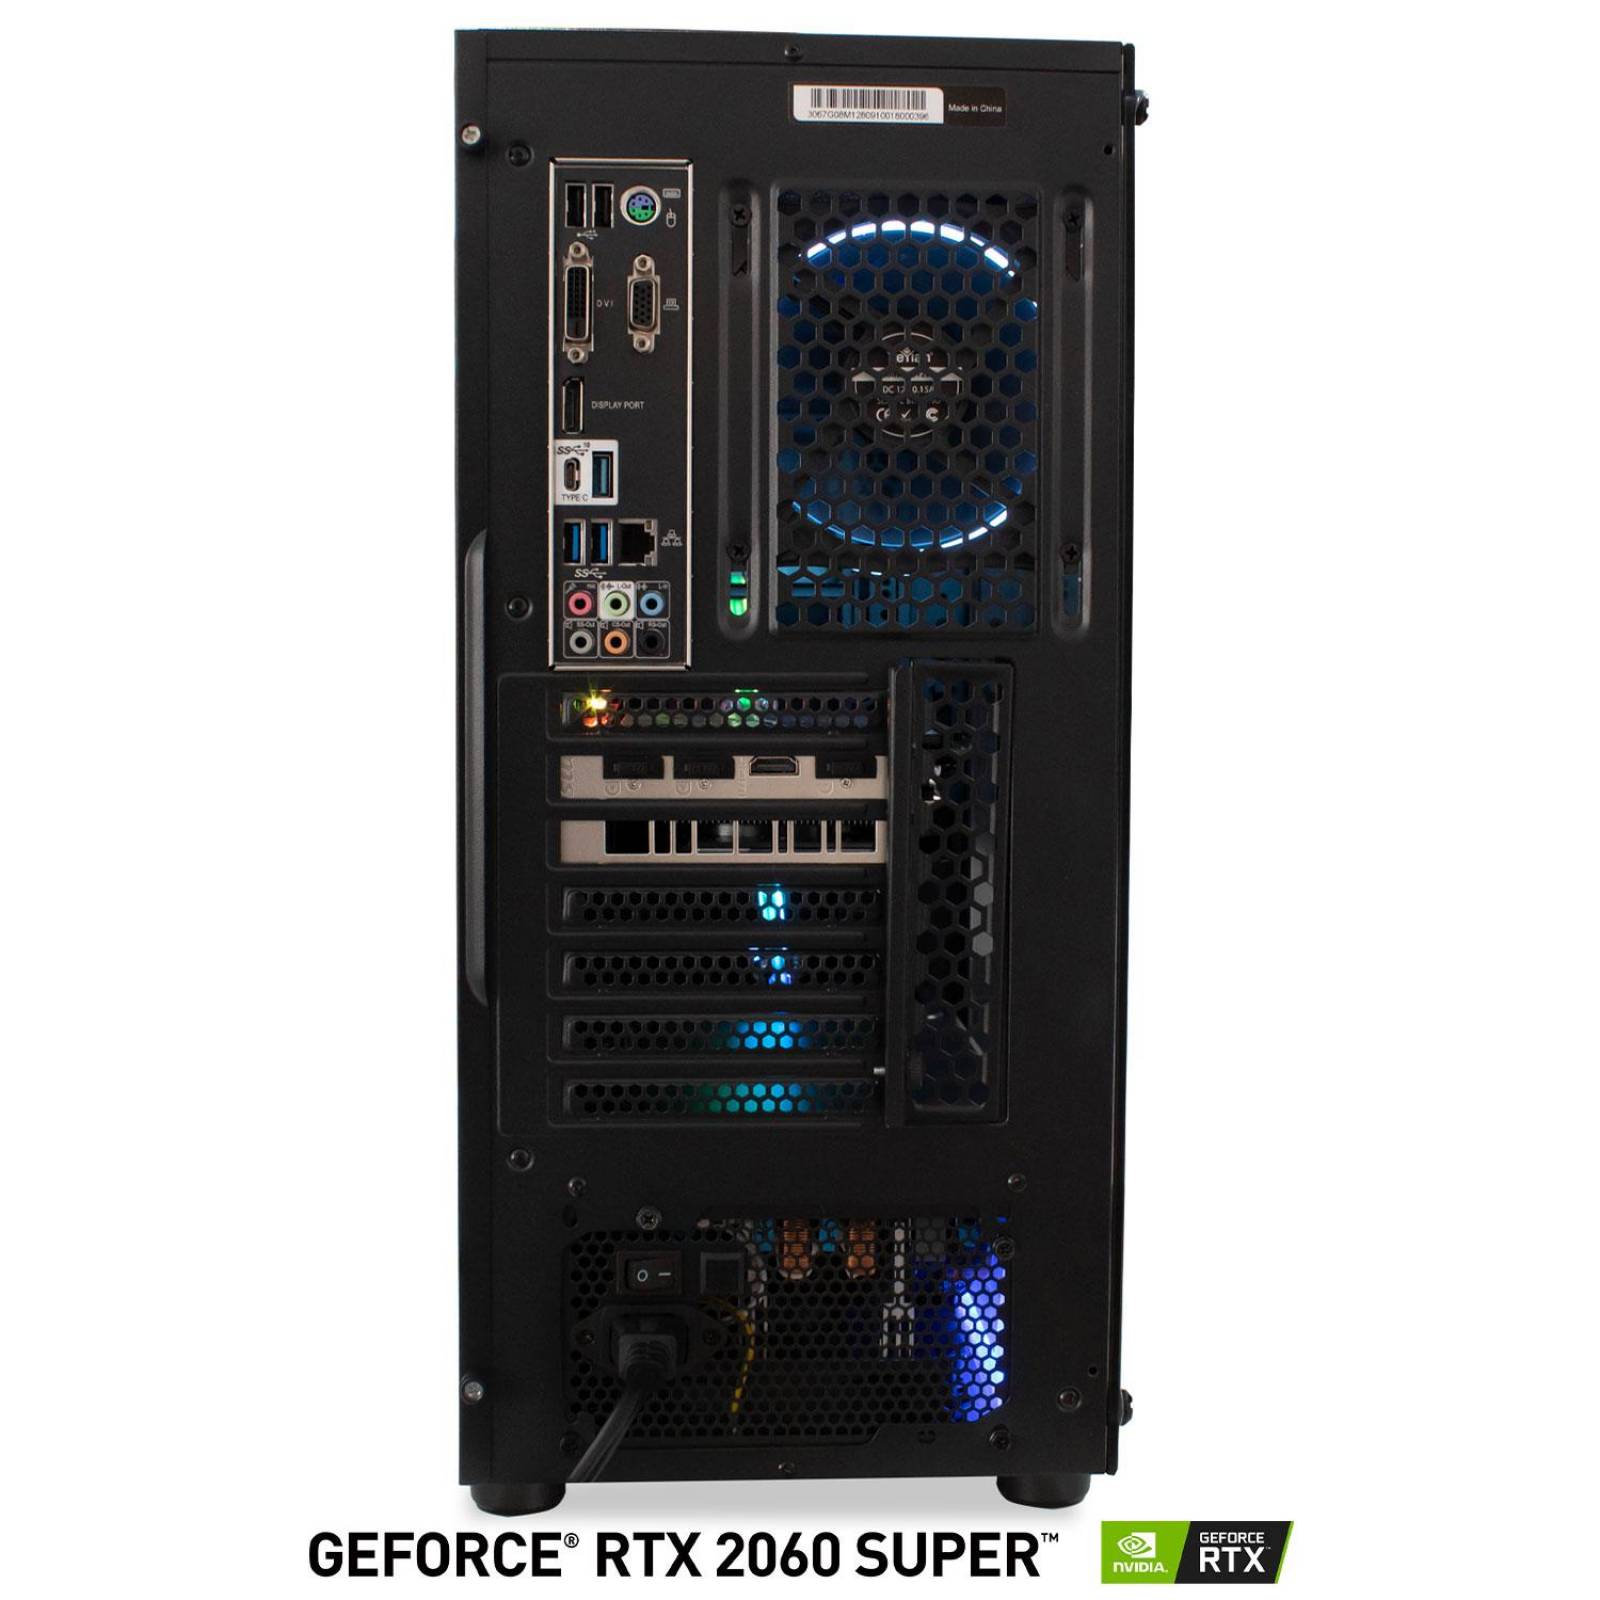 Xtreme PC Gamer MSI GeForce RTX 2060 Super Intel Core I7 16Gb SSD 512GB RGB 